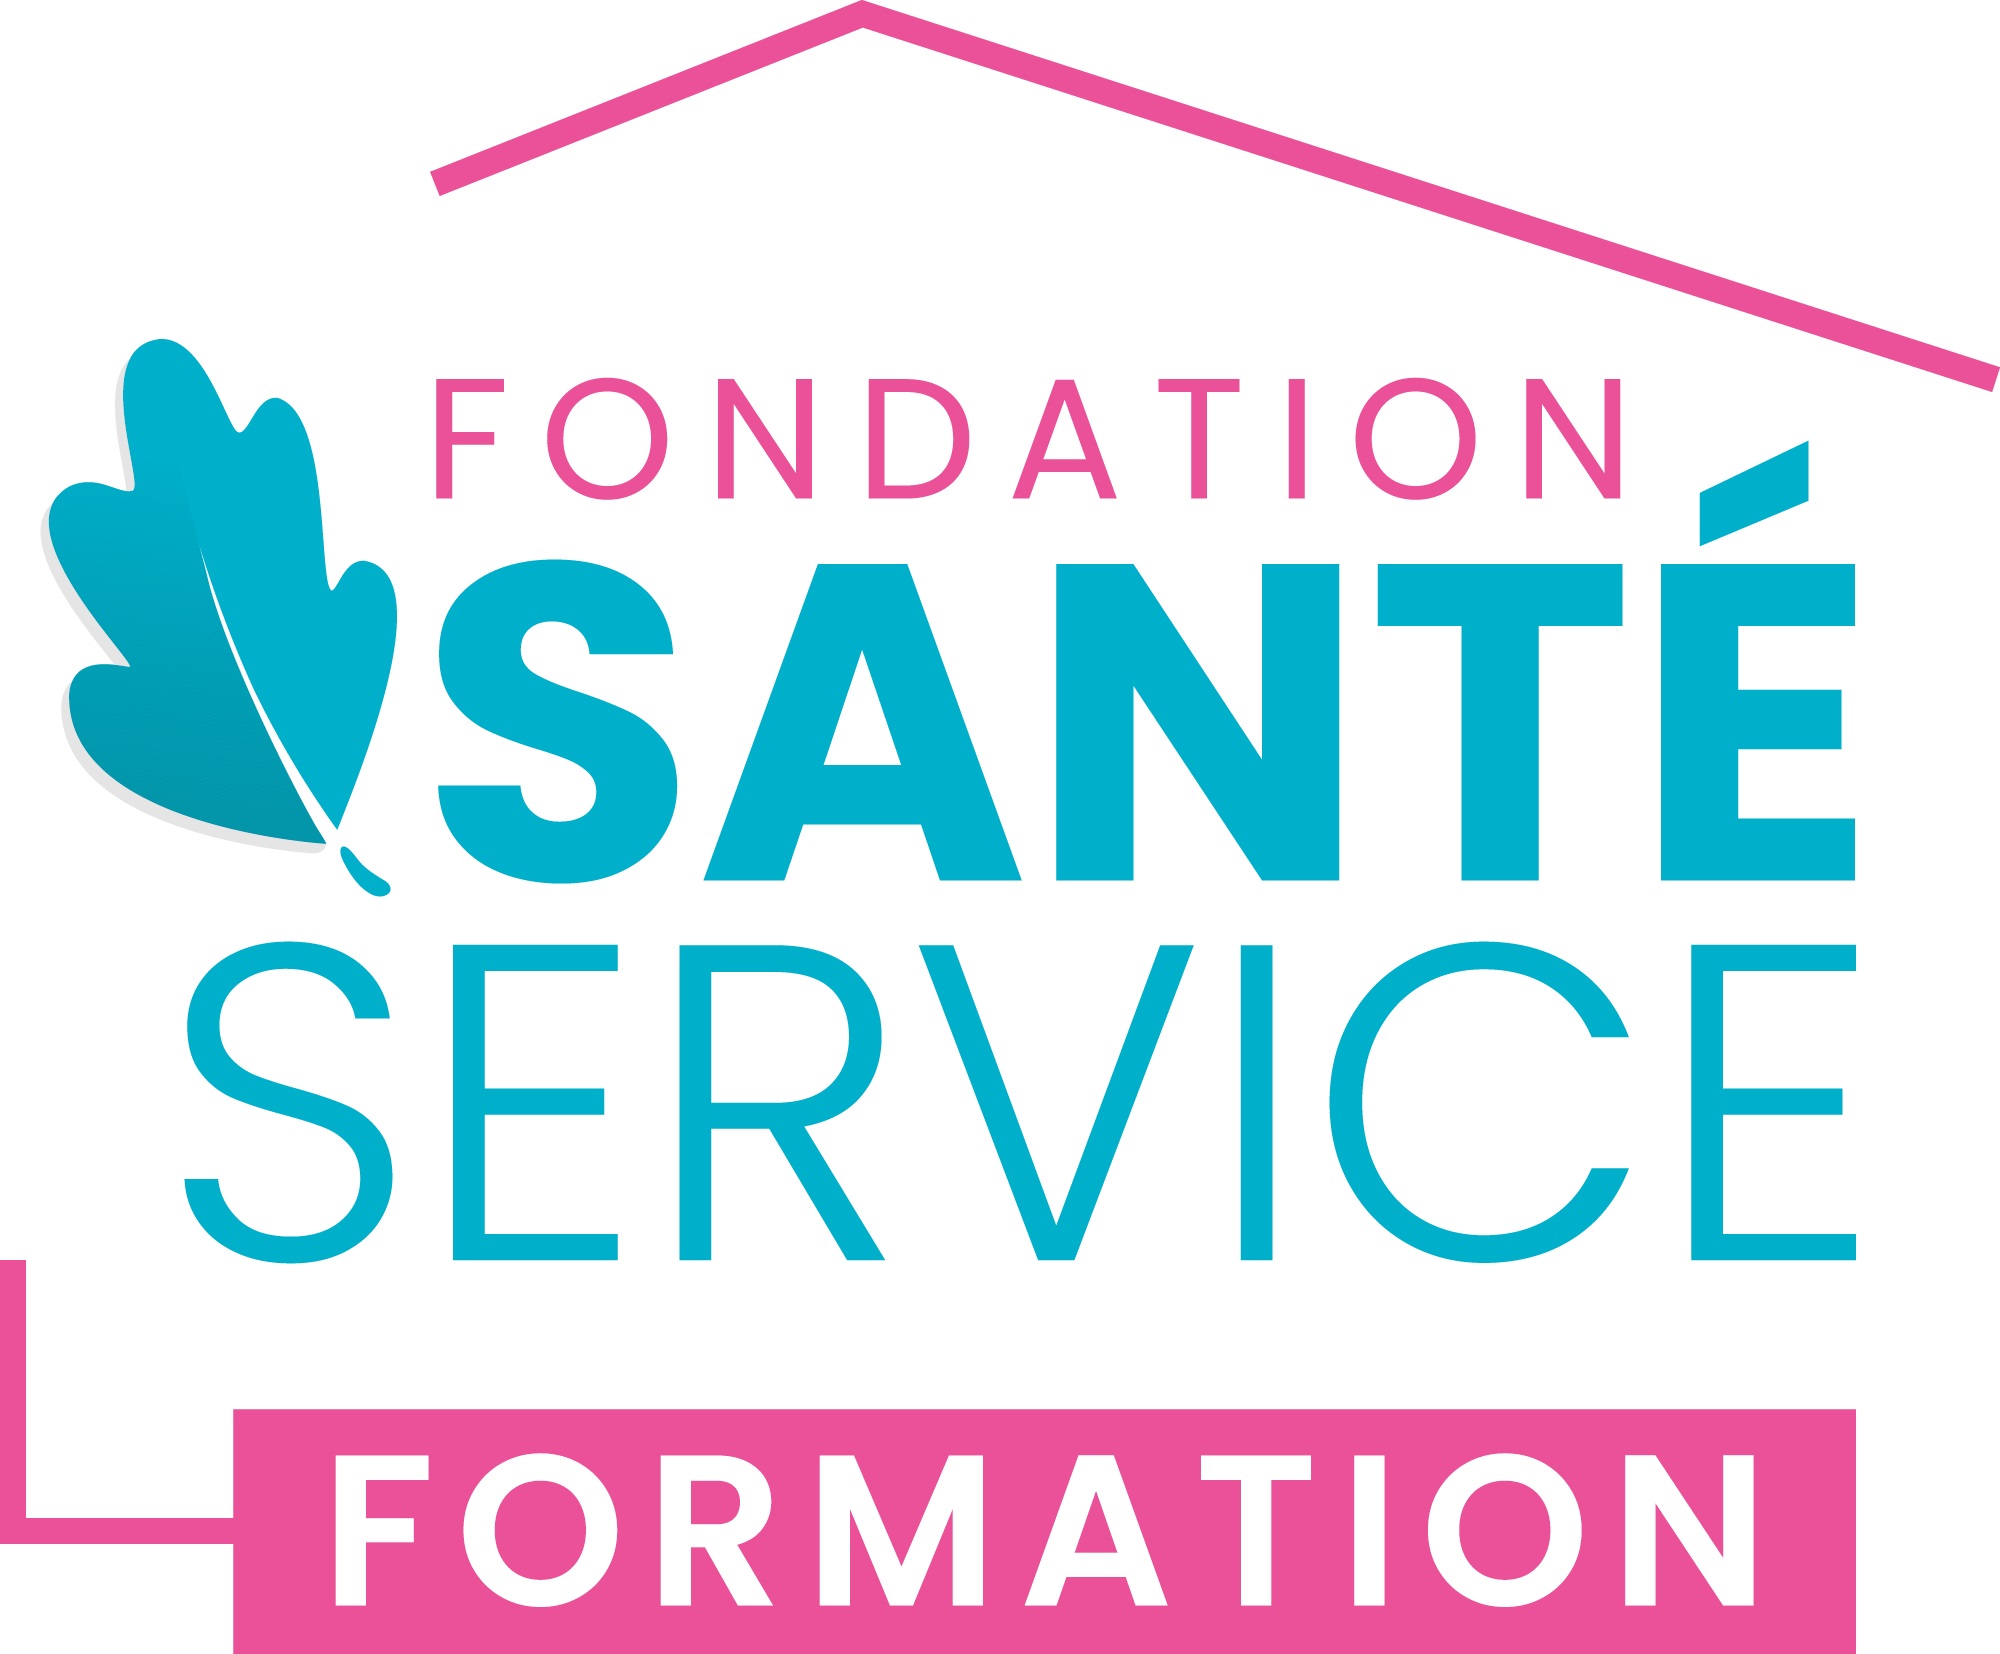 SANTE SERVICE FORMATION